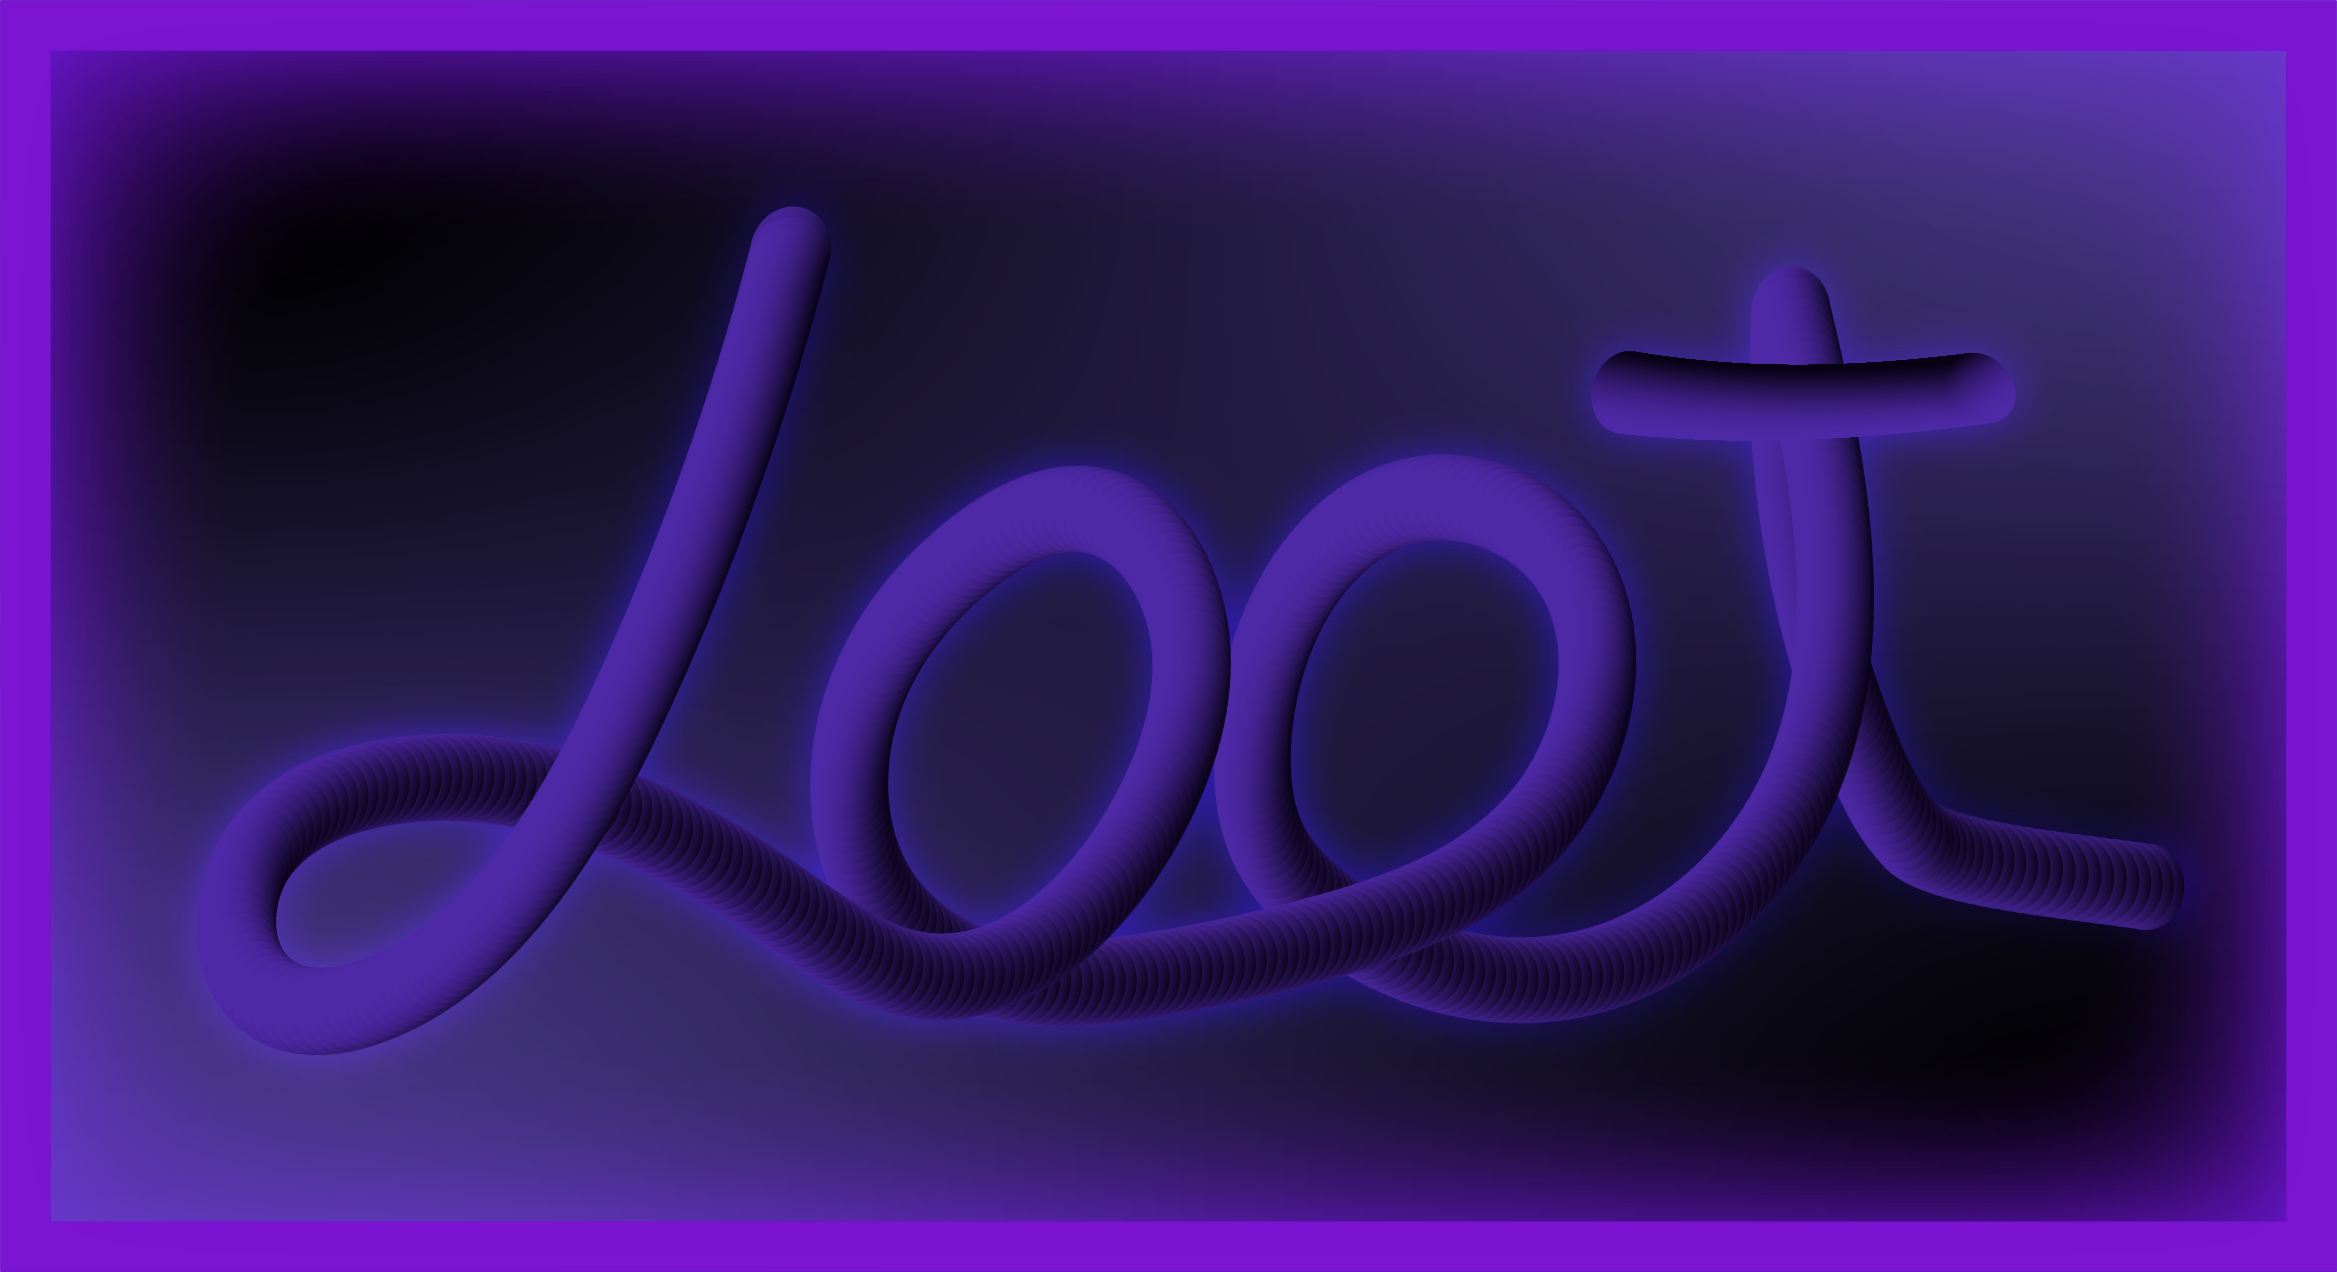 loot